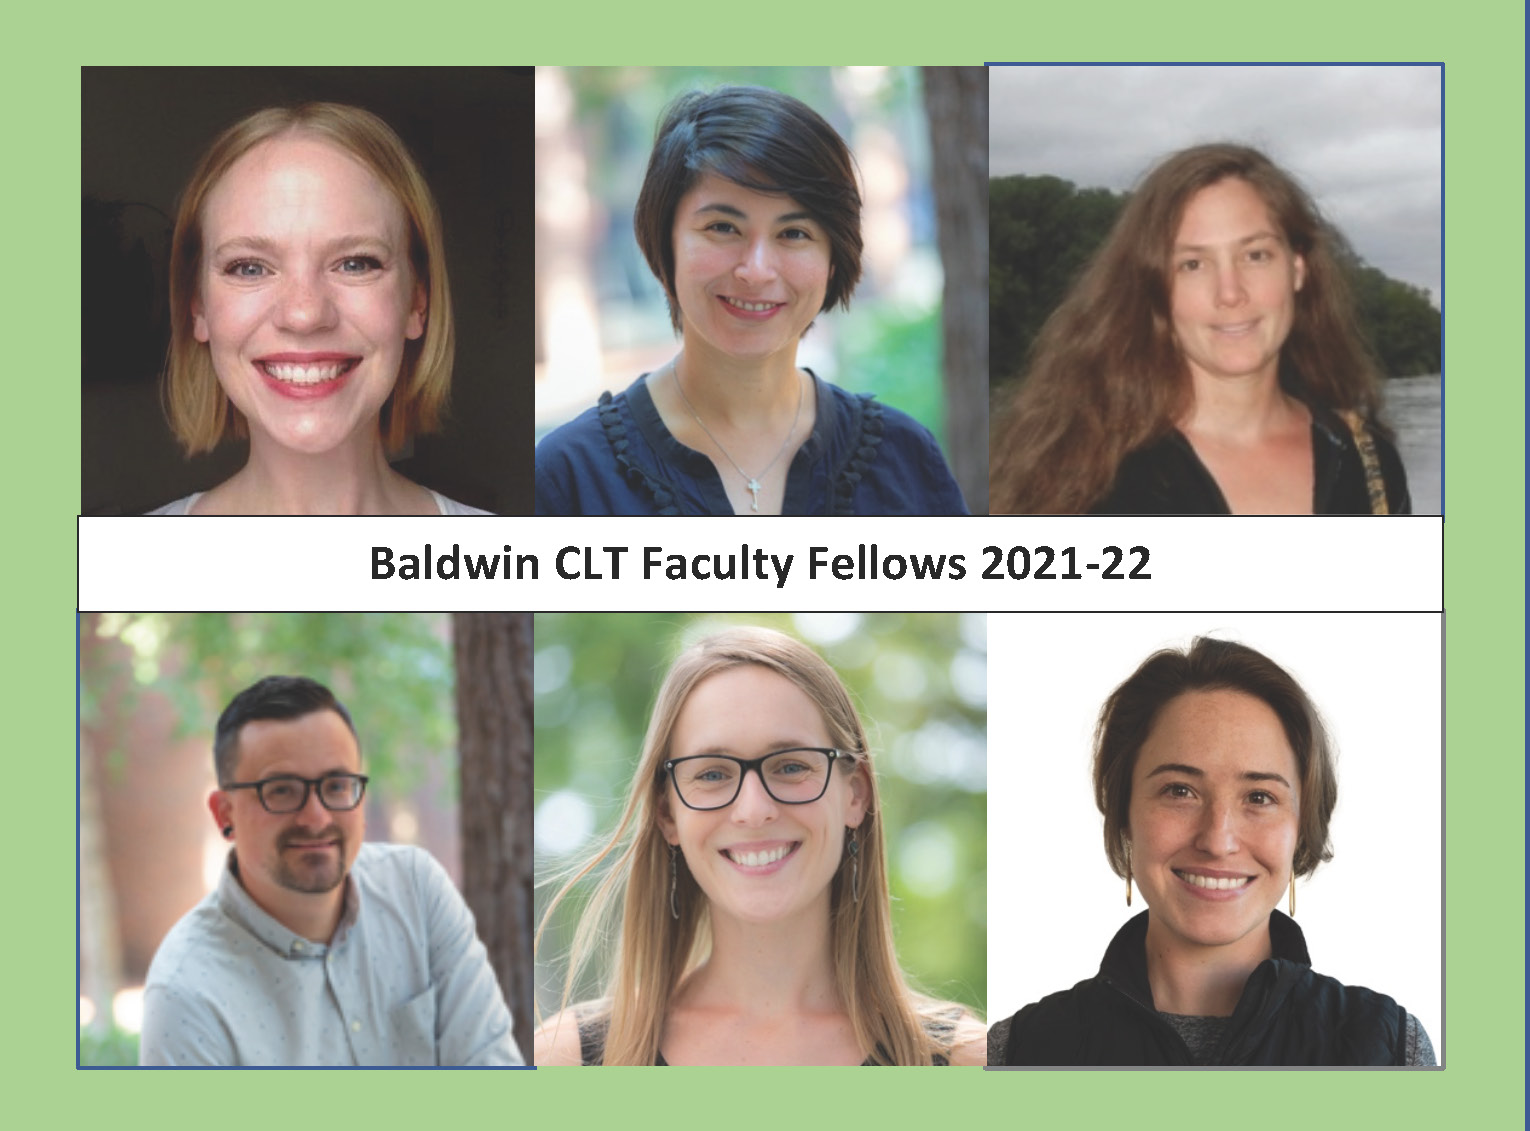 faculty-fellows-2021-22-compilation.jpg